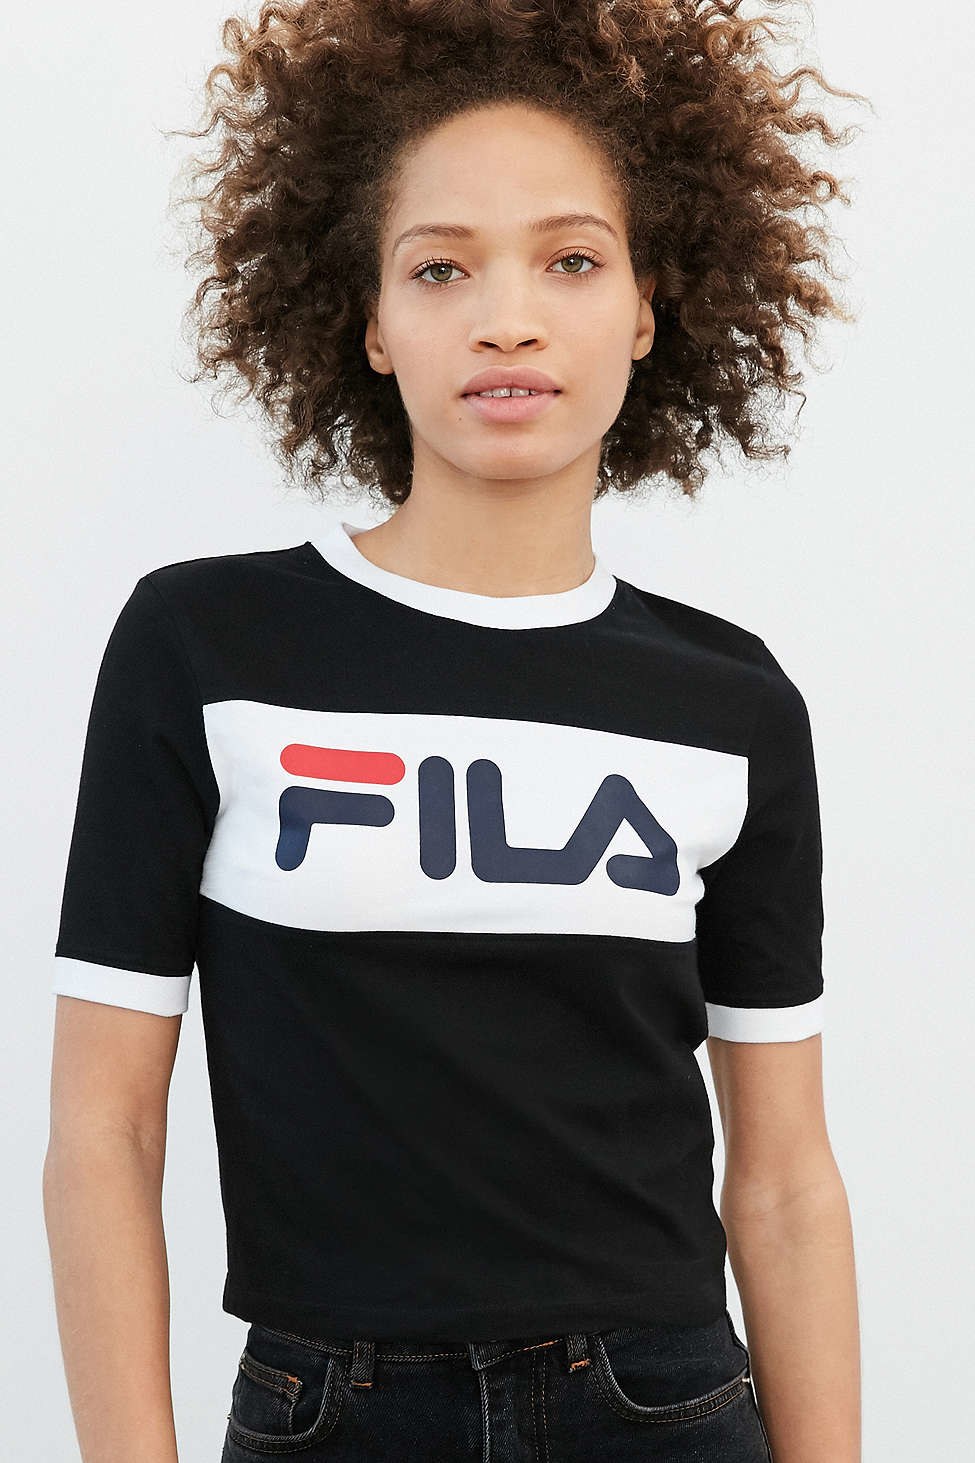 菲拉 t-shirt, [$38](http://rstyle.me/n/bqnew9823e)